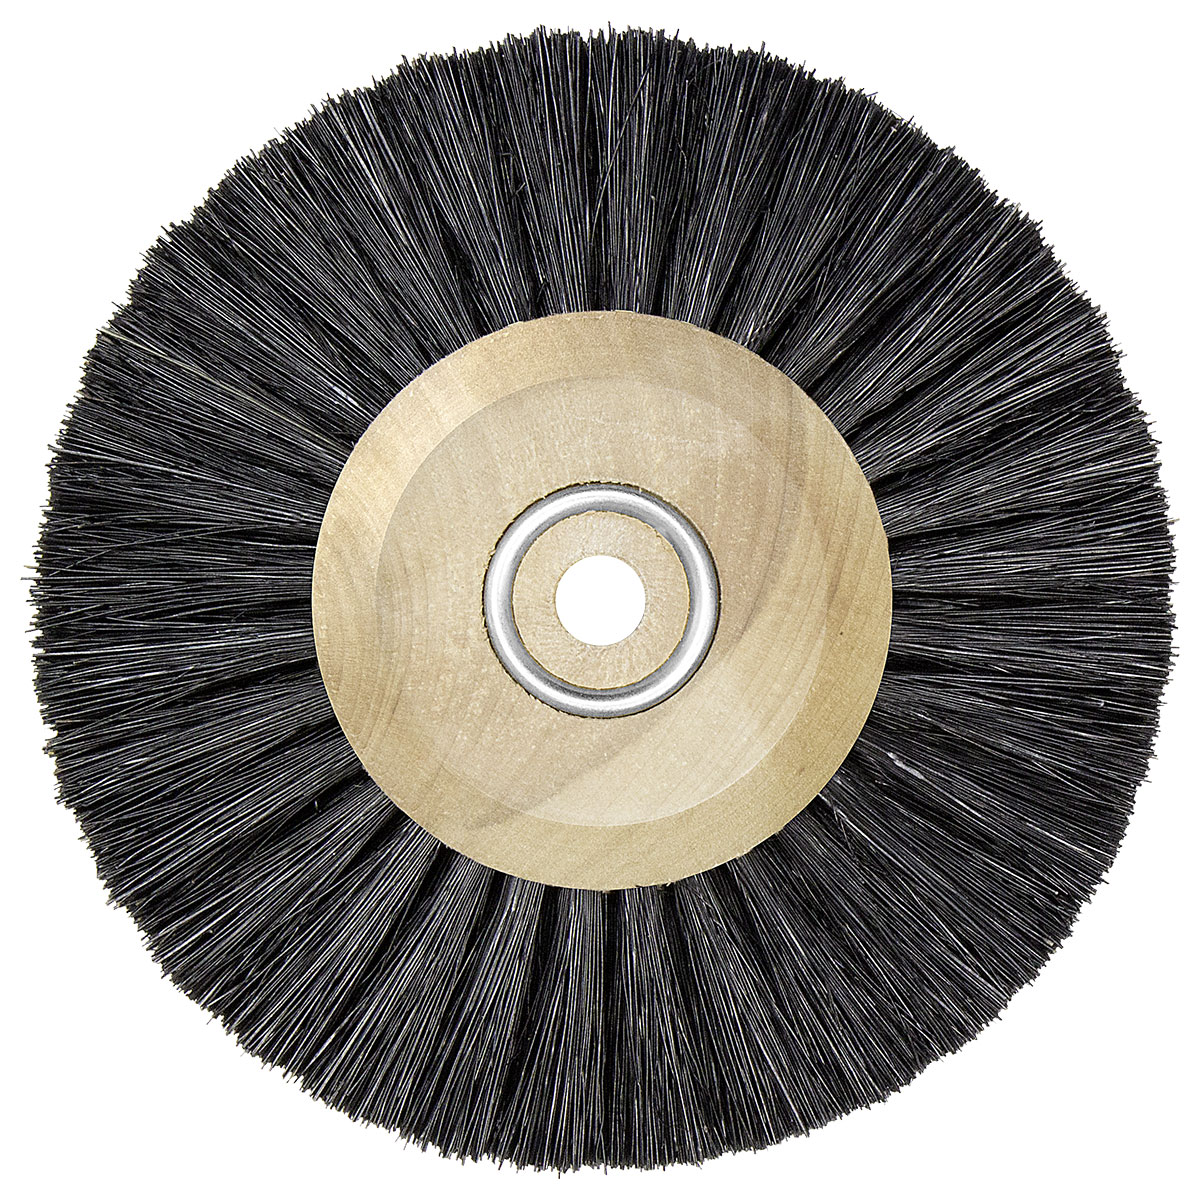 Wheel brush bristle 3 rows 55 mm